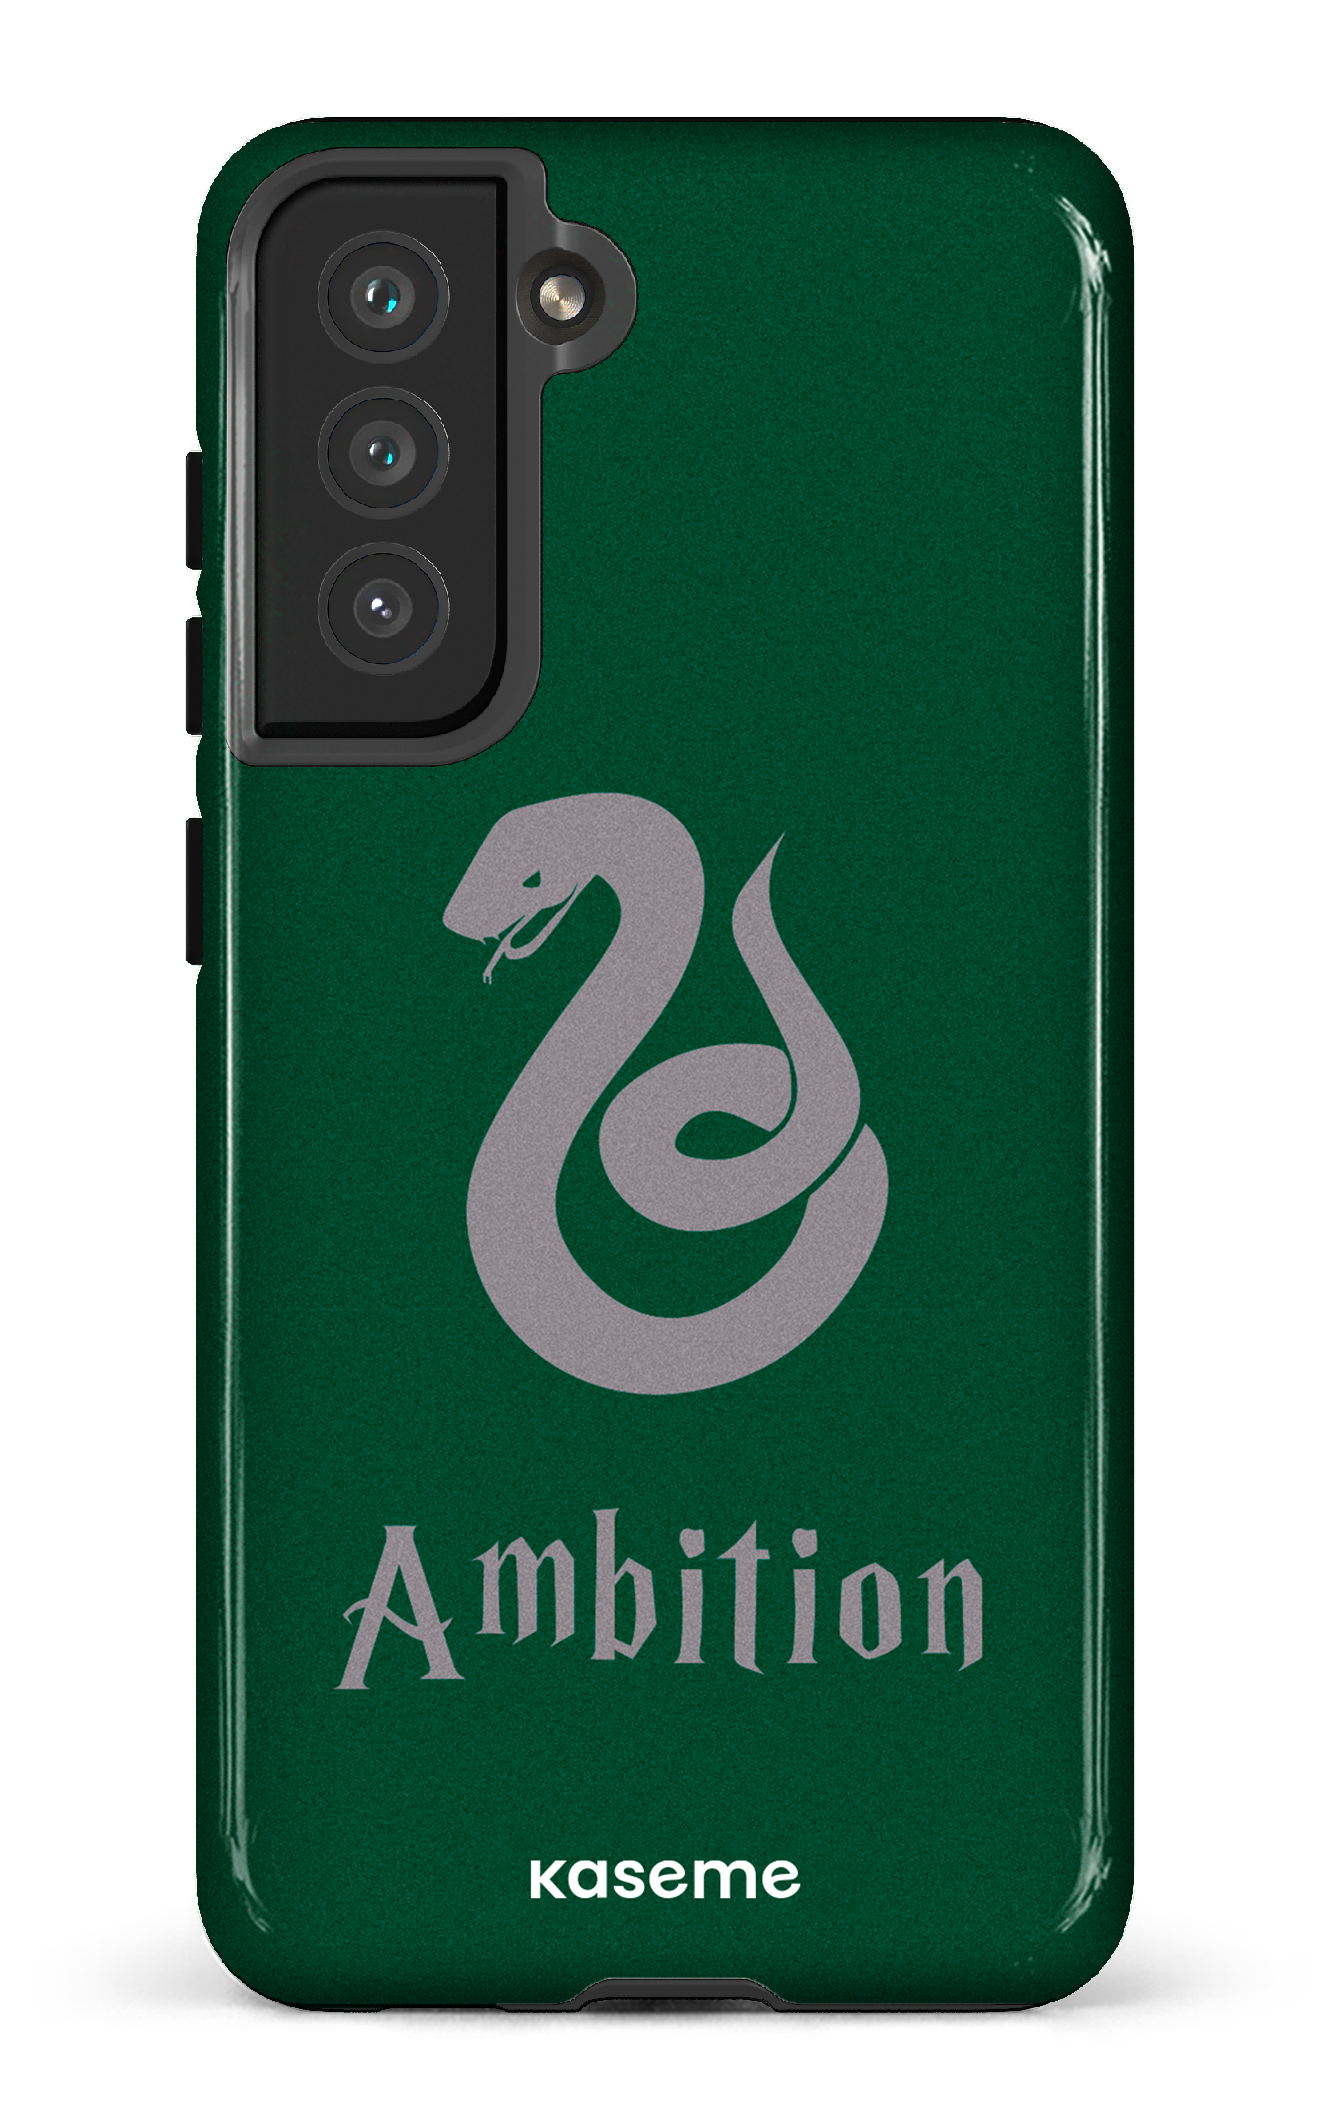 Ambition - Galaxy S21 FE